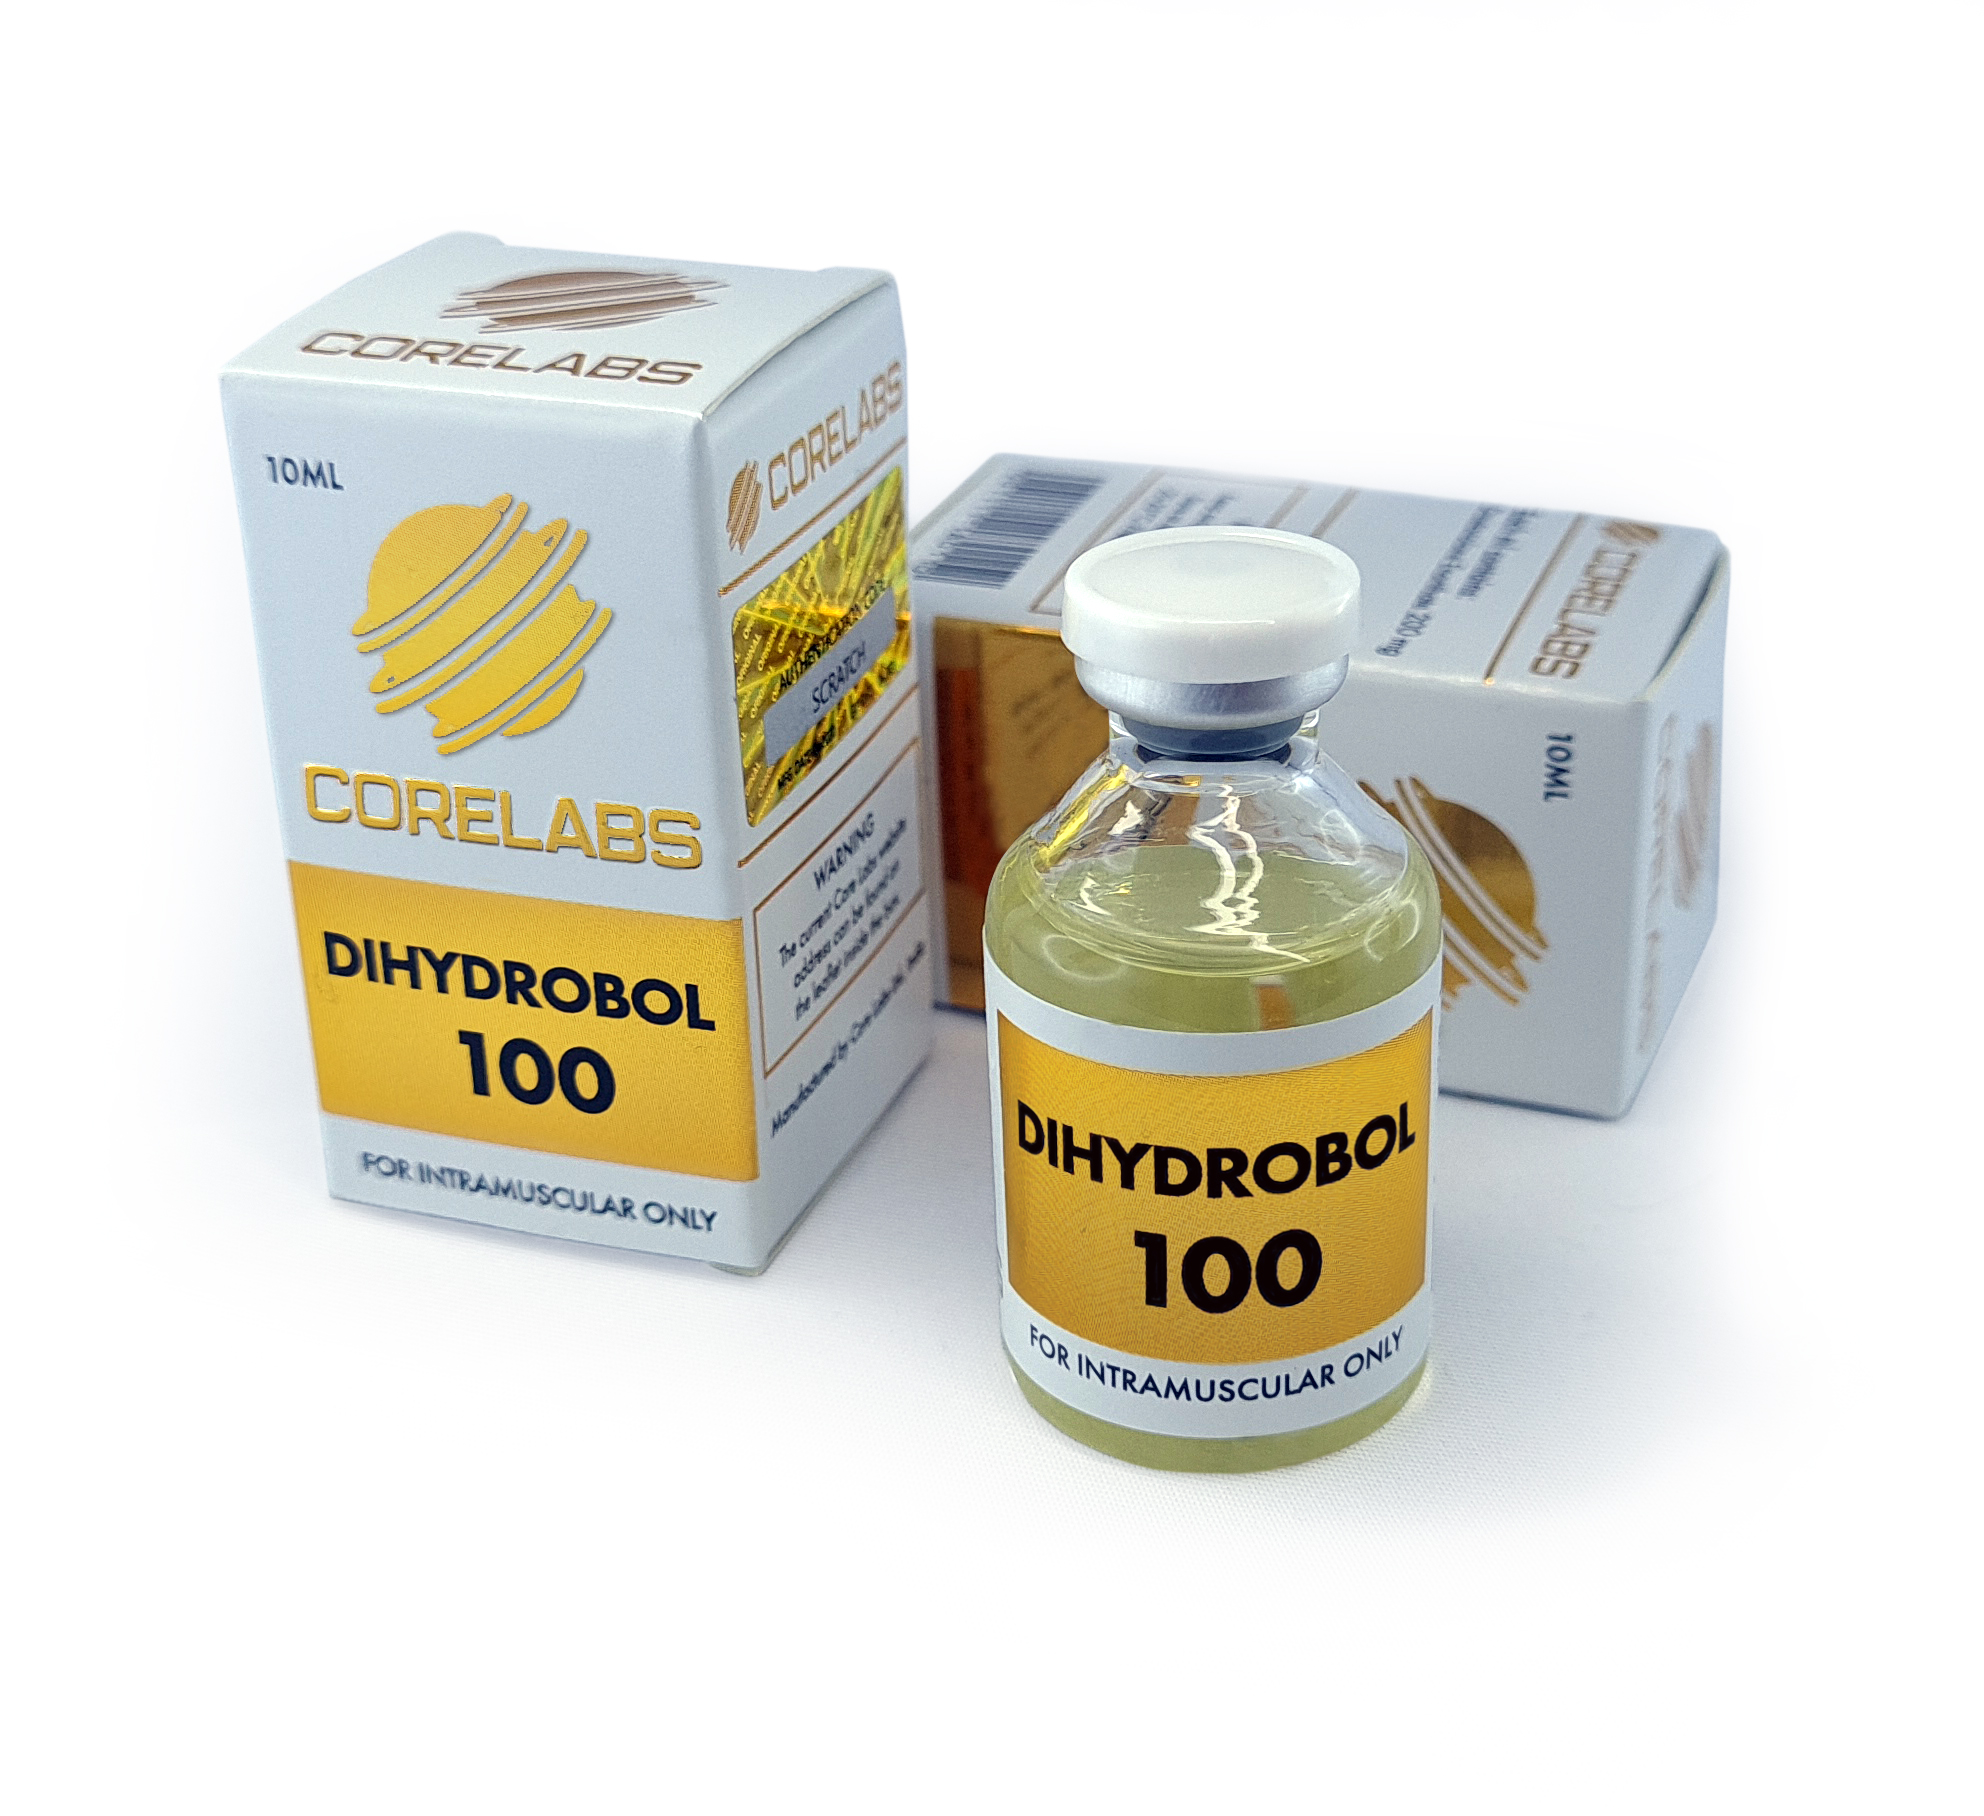 Dihydrobol 100